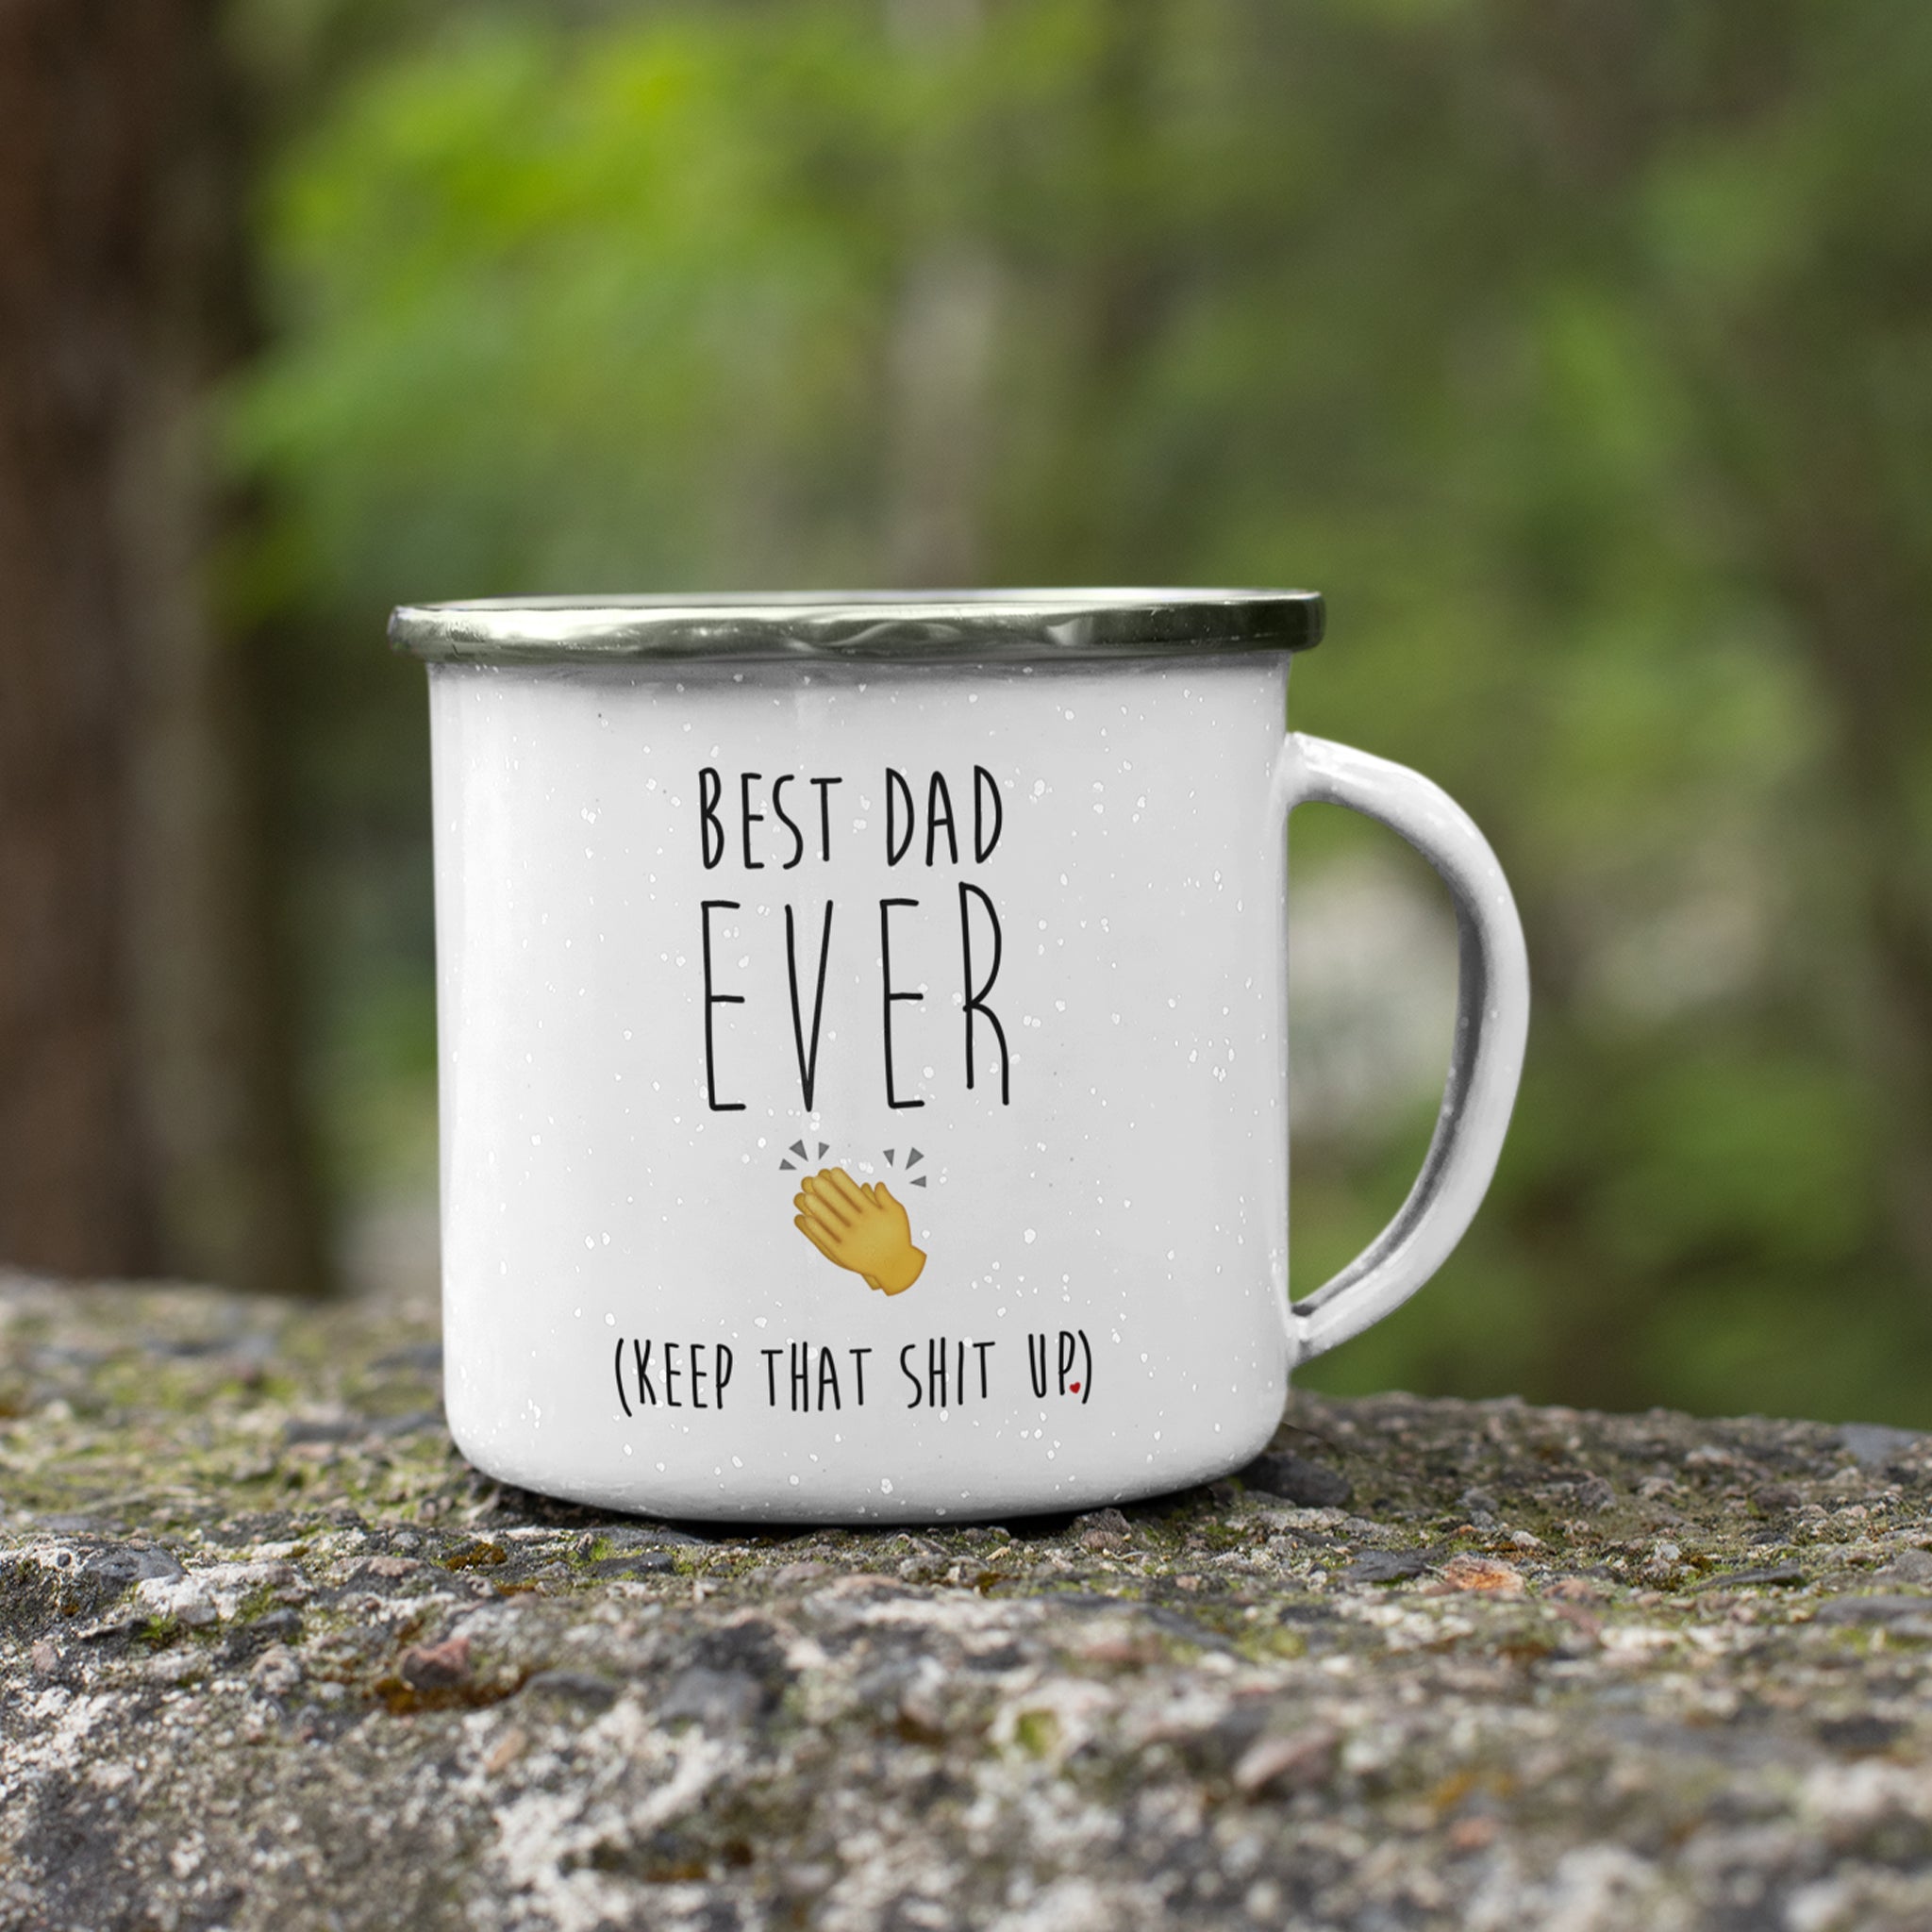 Best Dad Ever - Funny Camping Mug